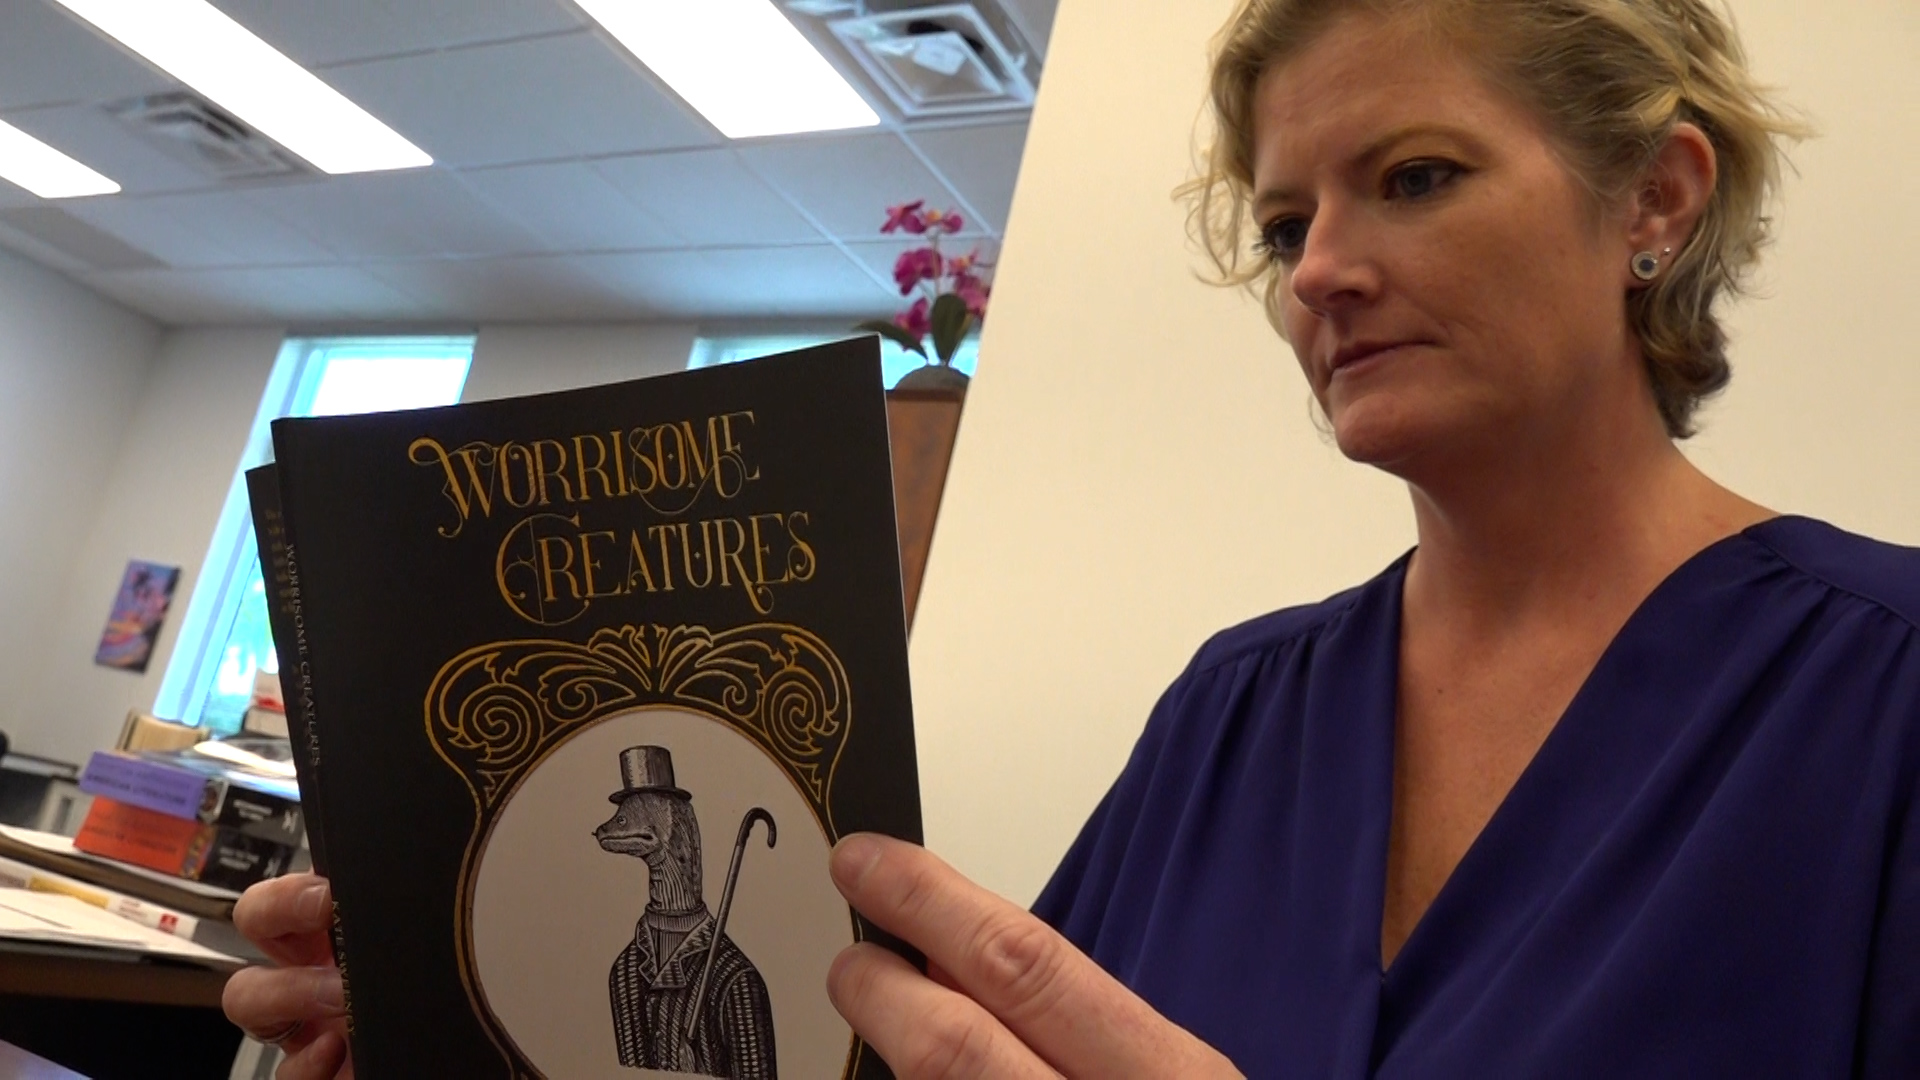 Keiser University New Port Richey professor inspires students with ‘Worrisome Creatures’ poetry book